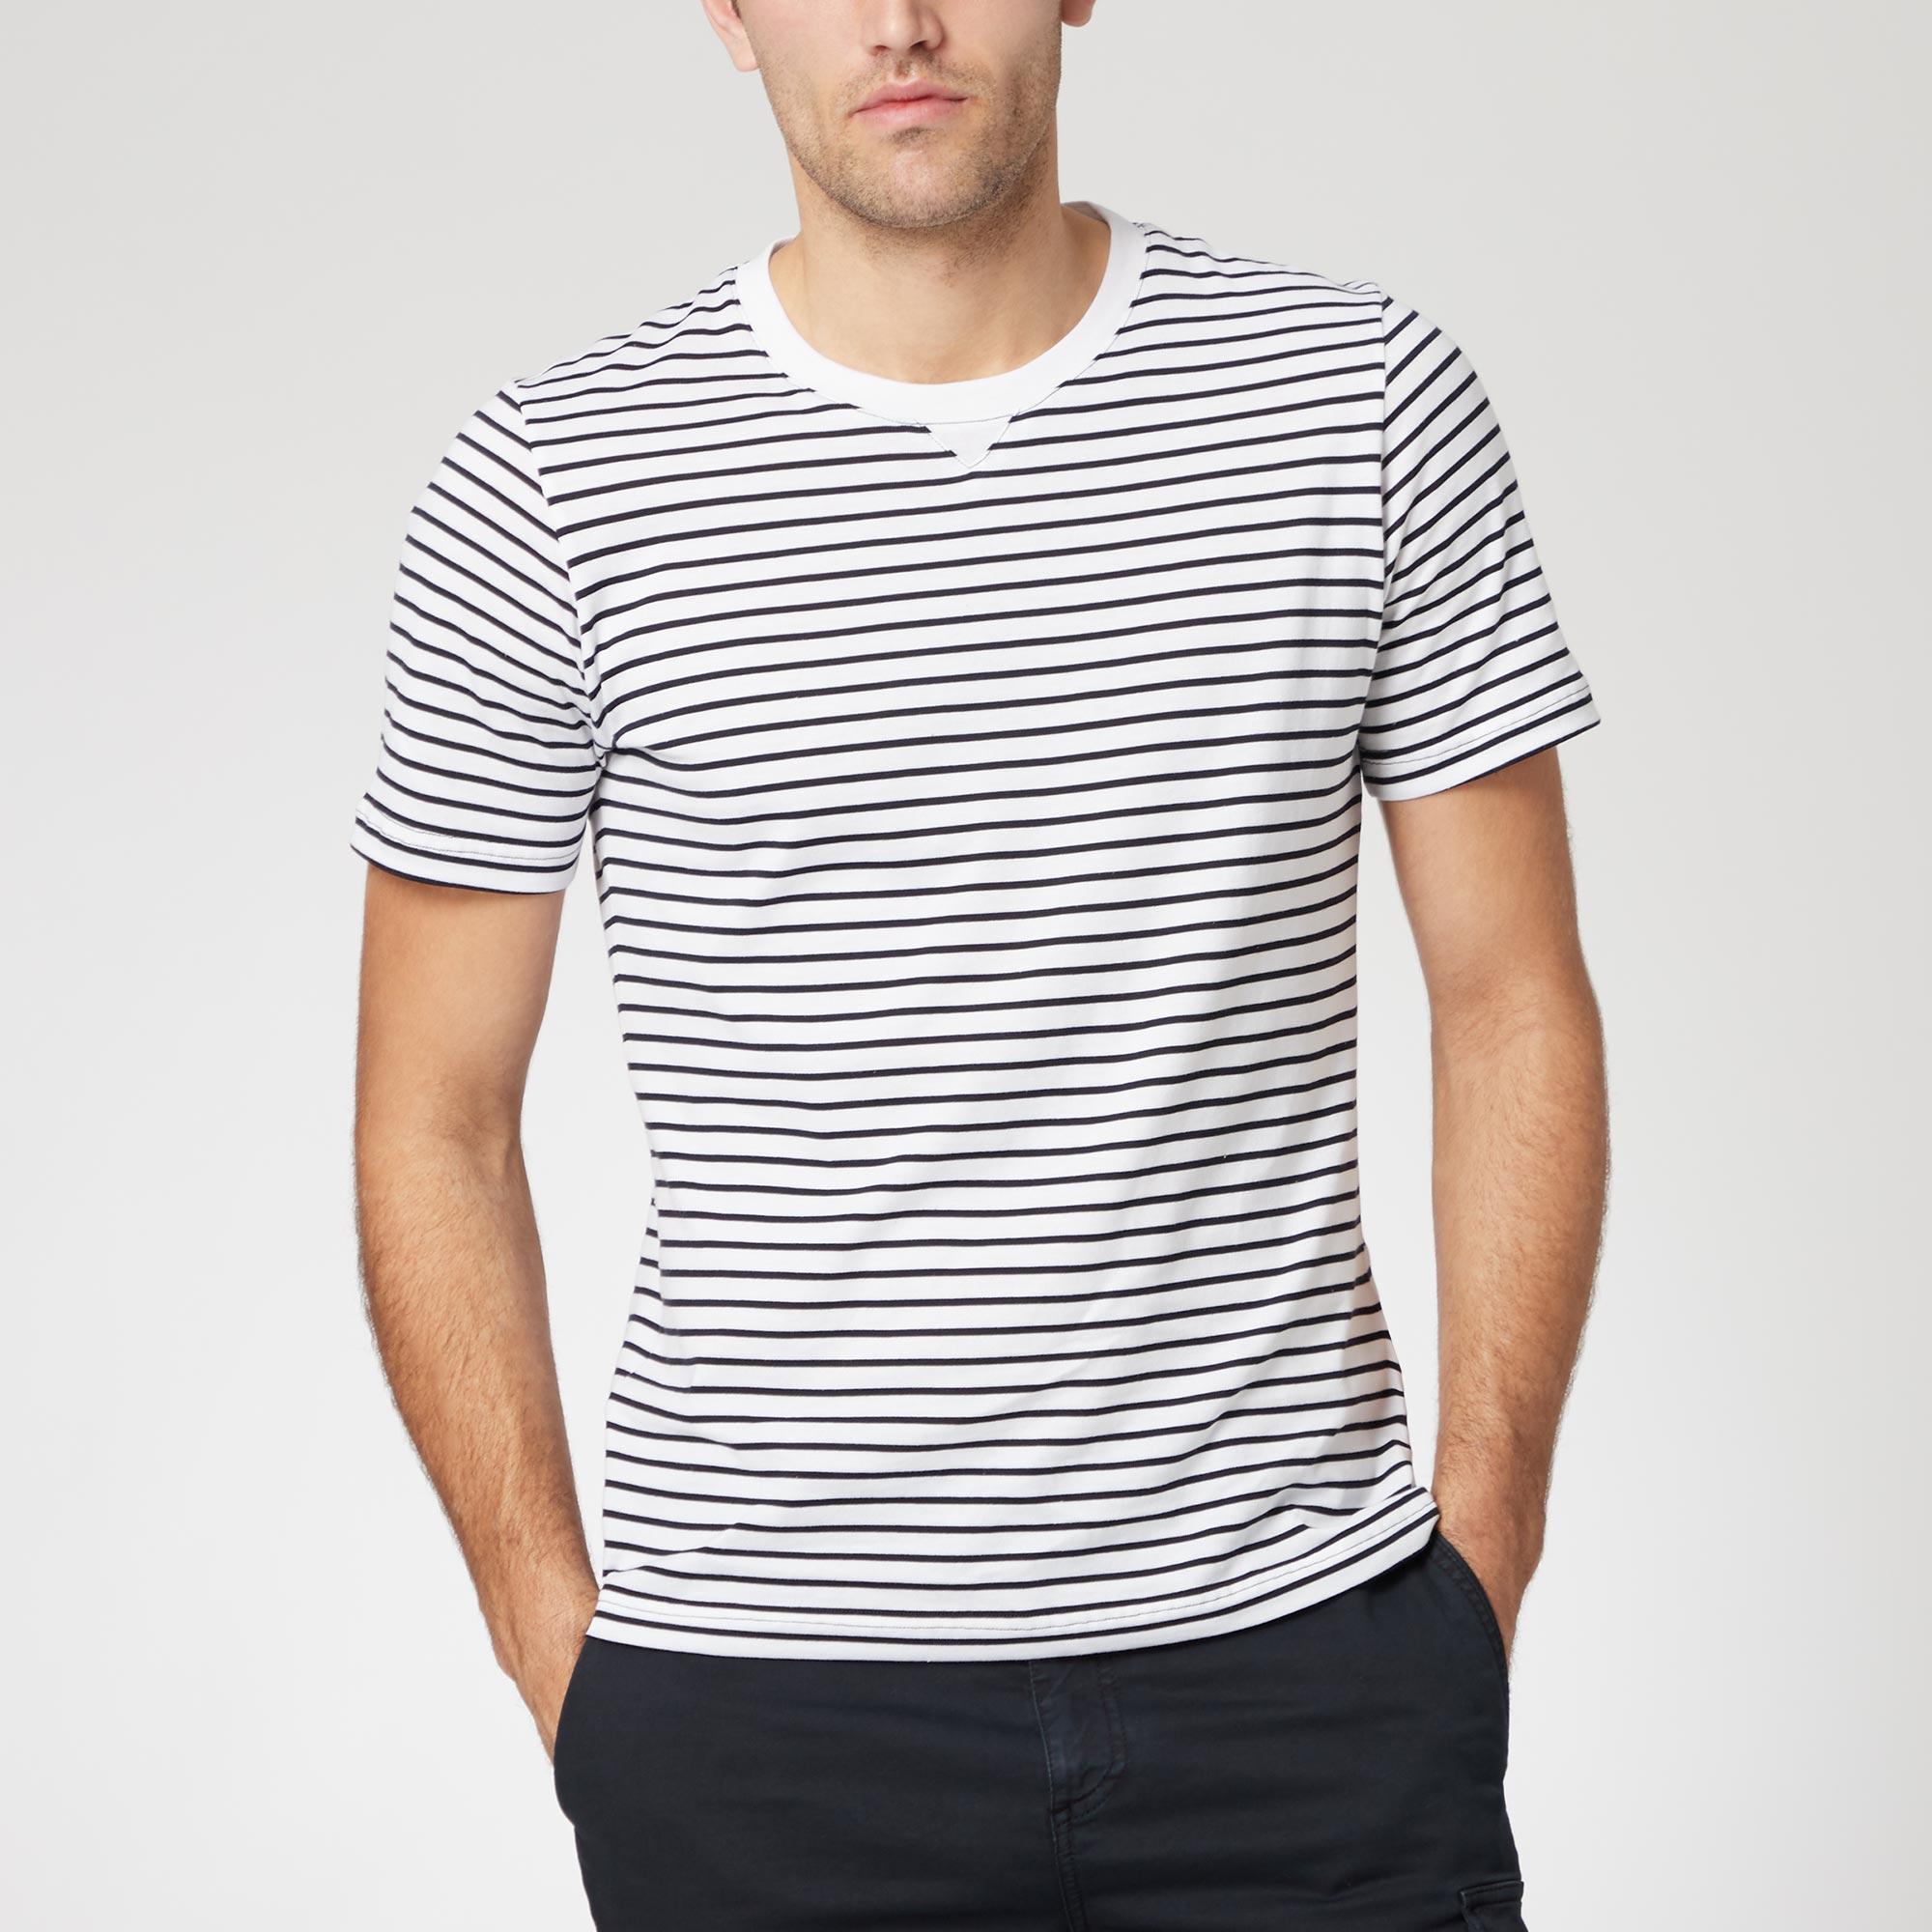 Striped T-Shirt (3mths-6yrs)